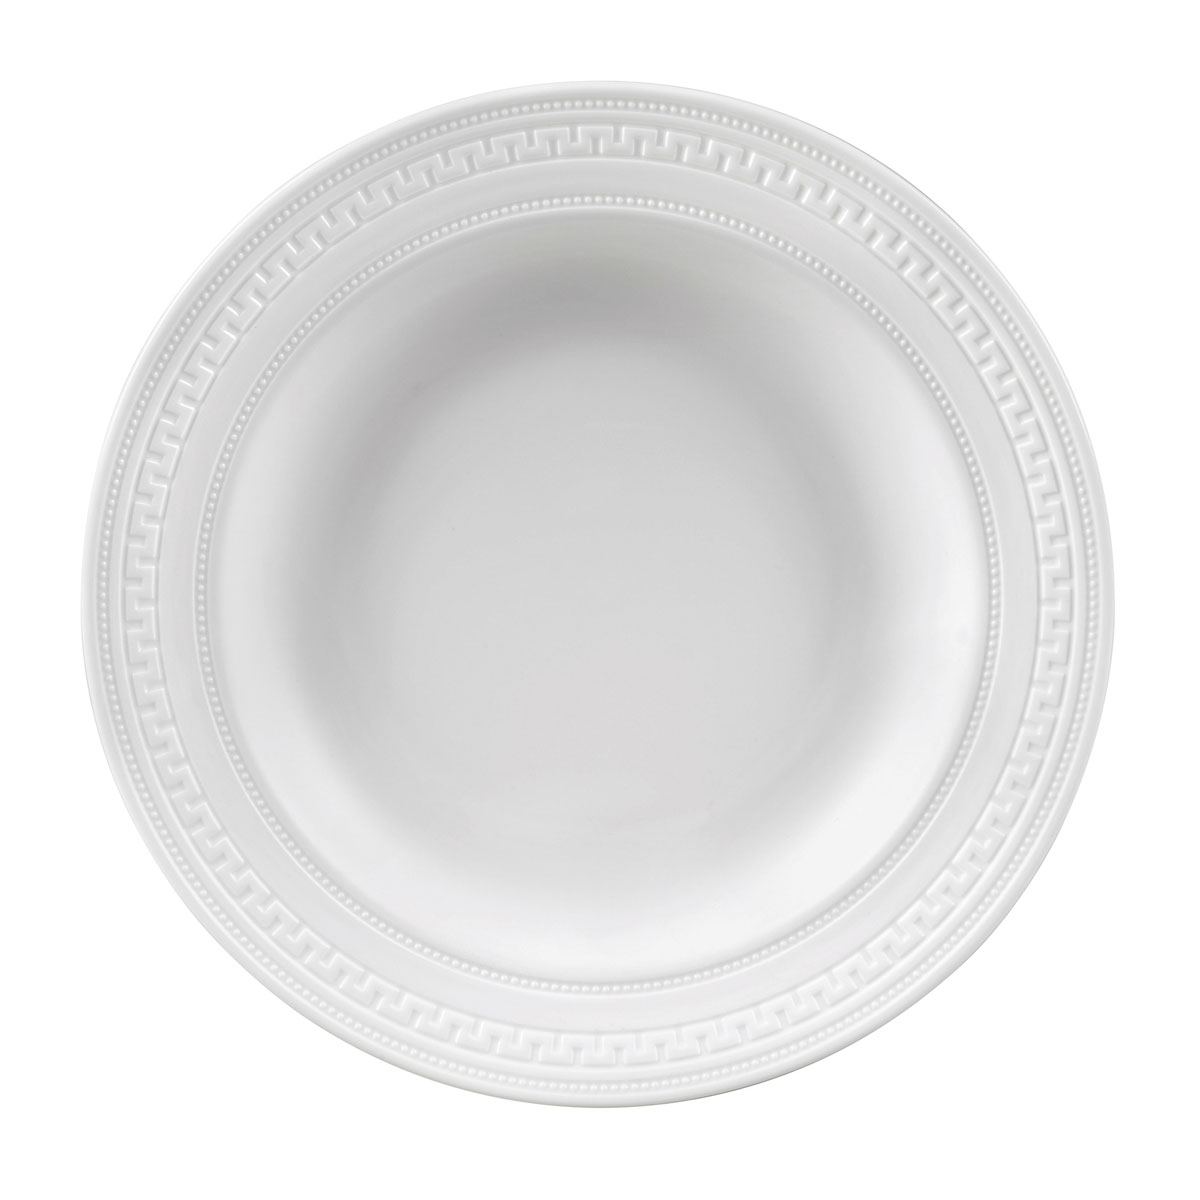 Тарелка суповая Wedgwood Intaglio 23 см тарелка суповая стеклокерамика 23 см 0 675 л квадратная пион daniks ffsp 90 k1306 2